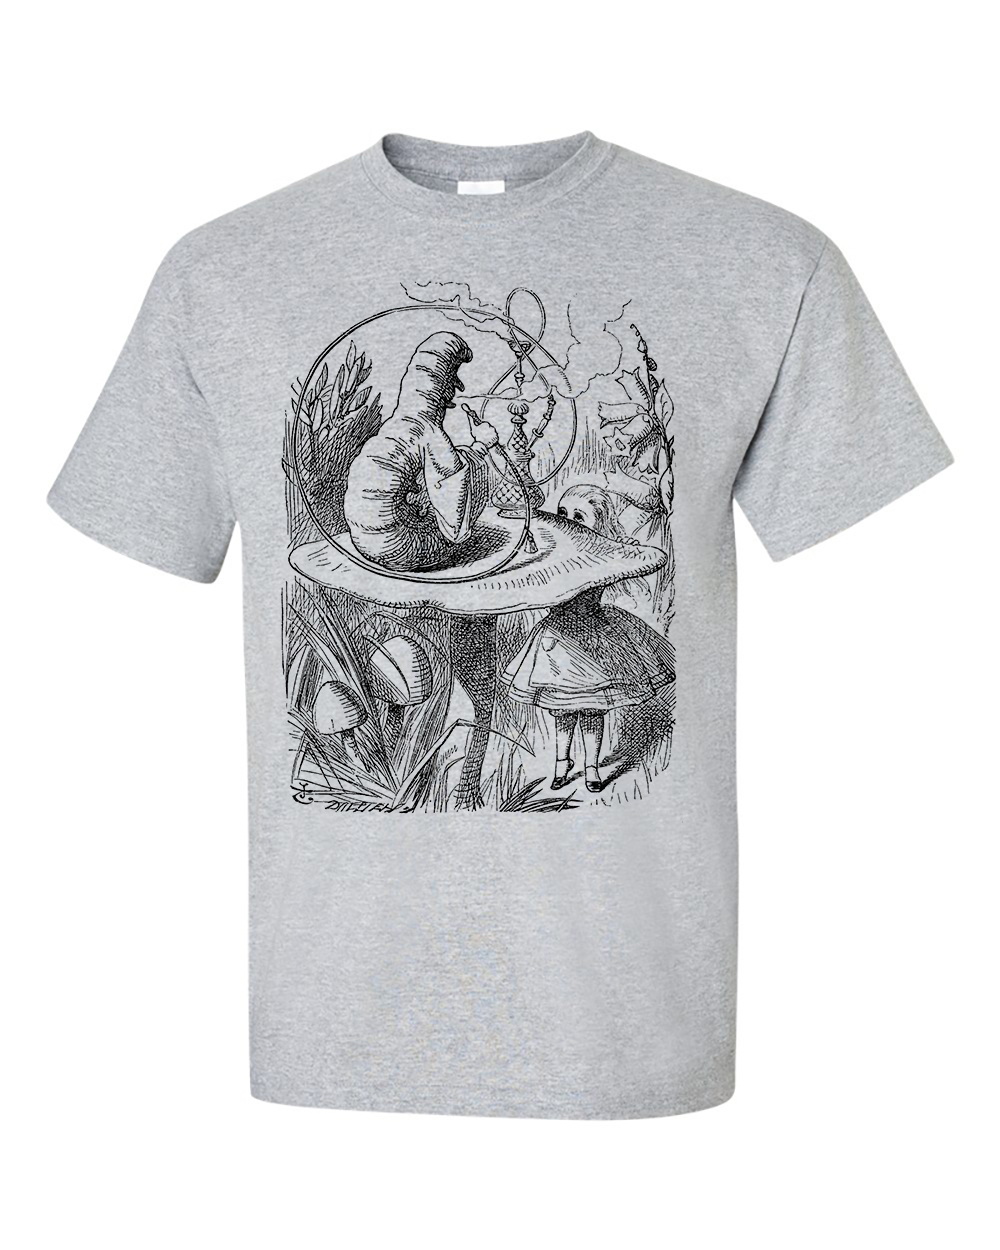 Absolem The Caterpillar Smoking a Hooka Alice In Wonderland by John Tenniel Psychedelic Shisha T-Shirt